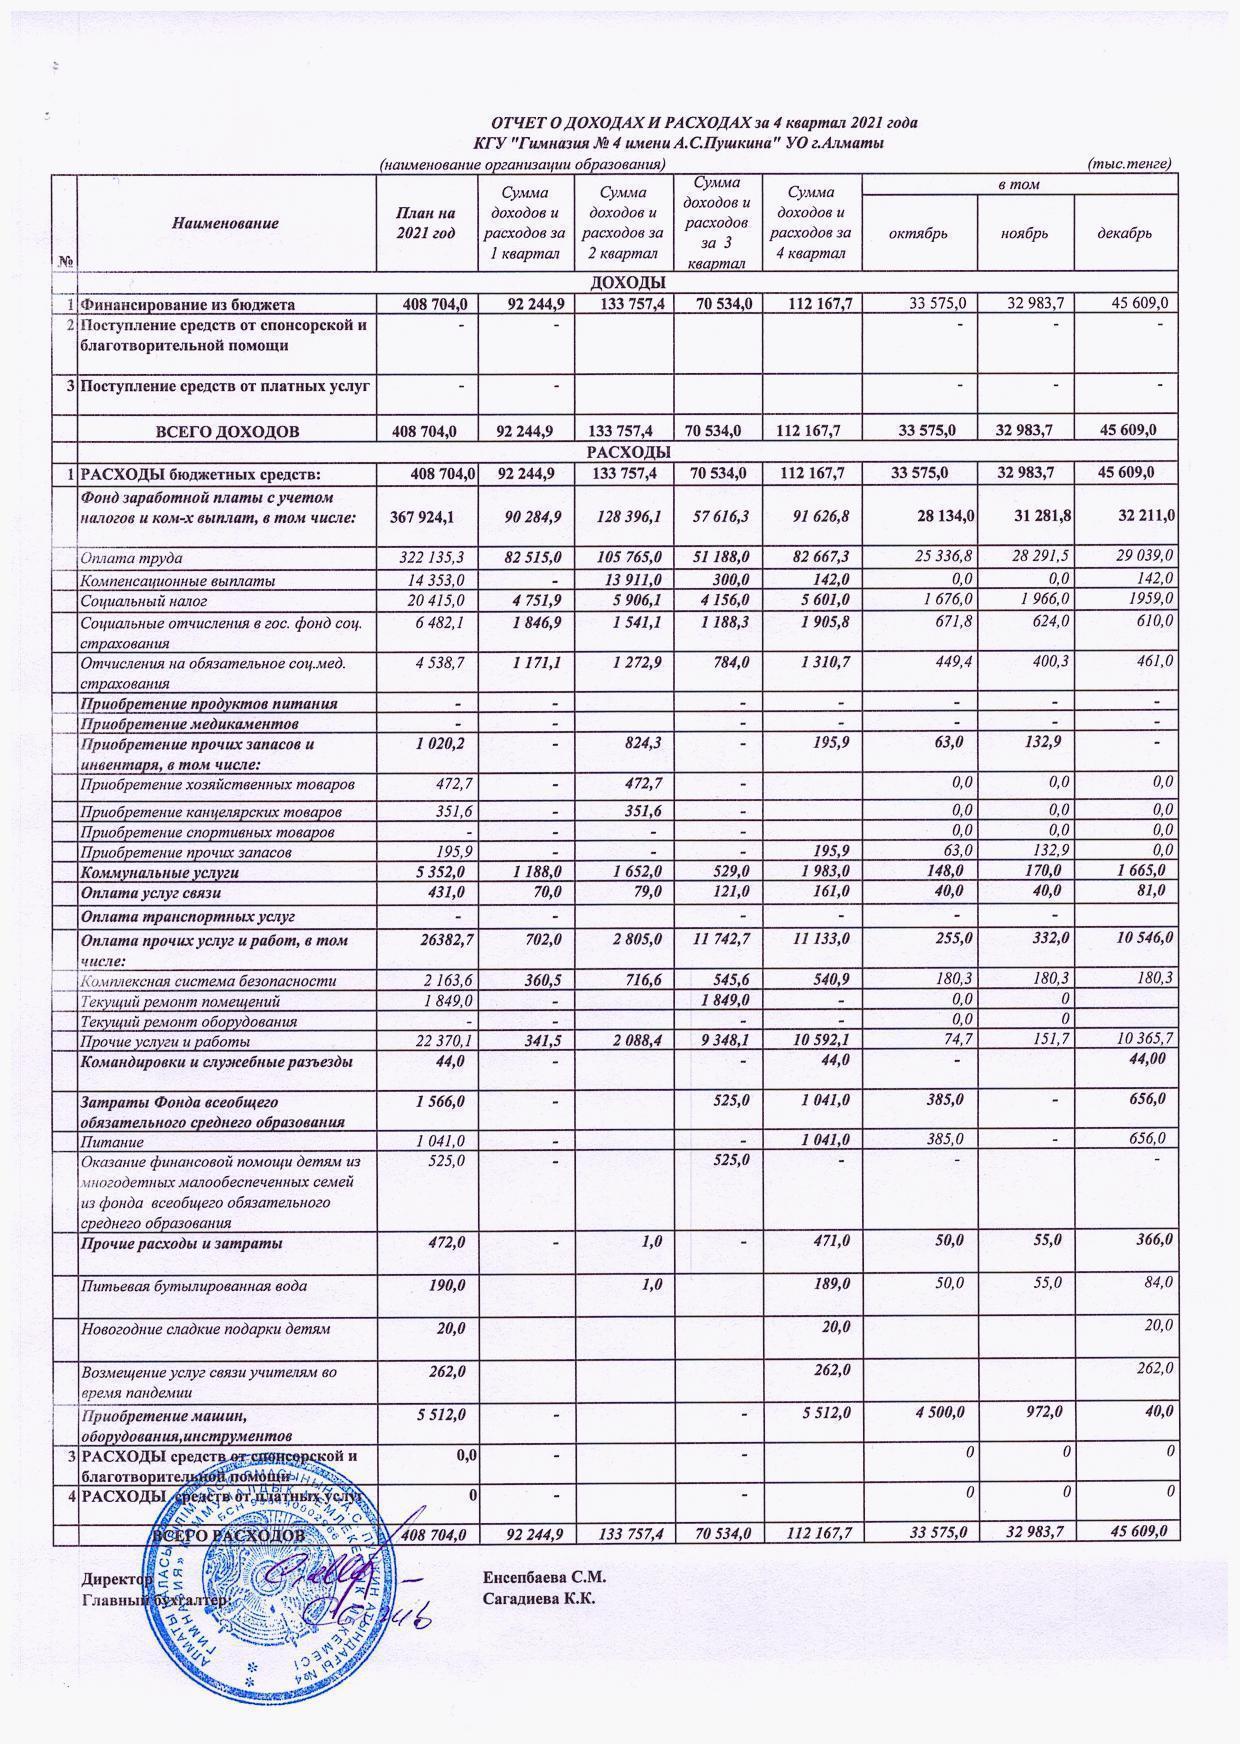 Отчет о доходах и расходах за 4 кв 2021